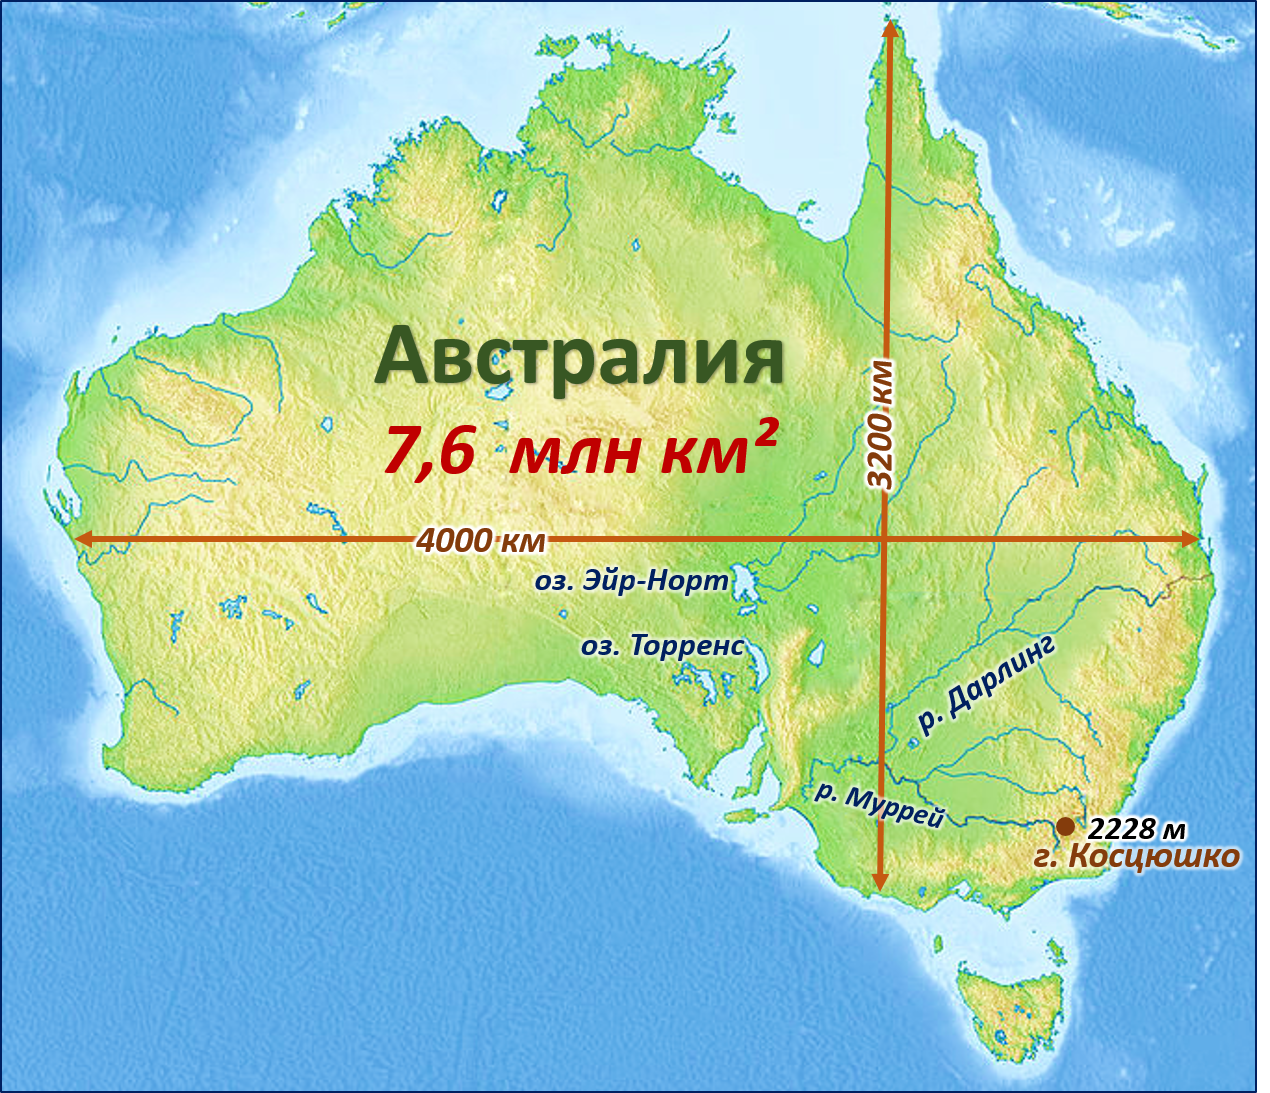 Гора Костюшко на карте Австралии. Пик Косцюшко Австралия. Озеро Эйр-Норт на карте Австралии. Гора Косцюшко в Австралии на карте. Покажи страну австралию